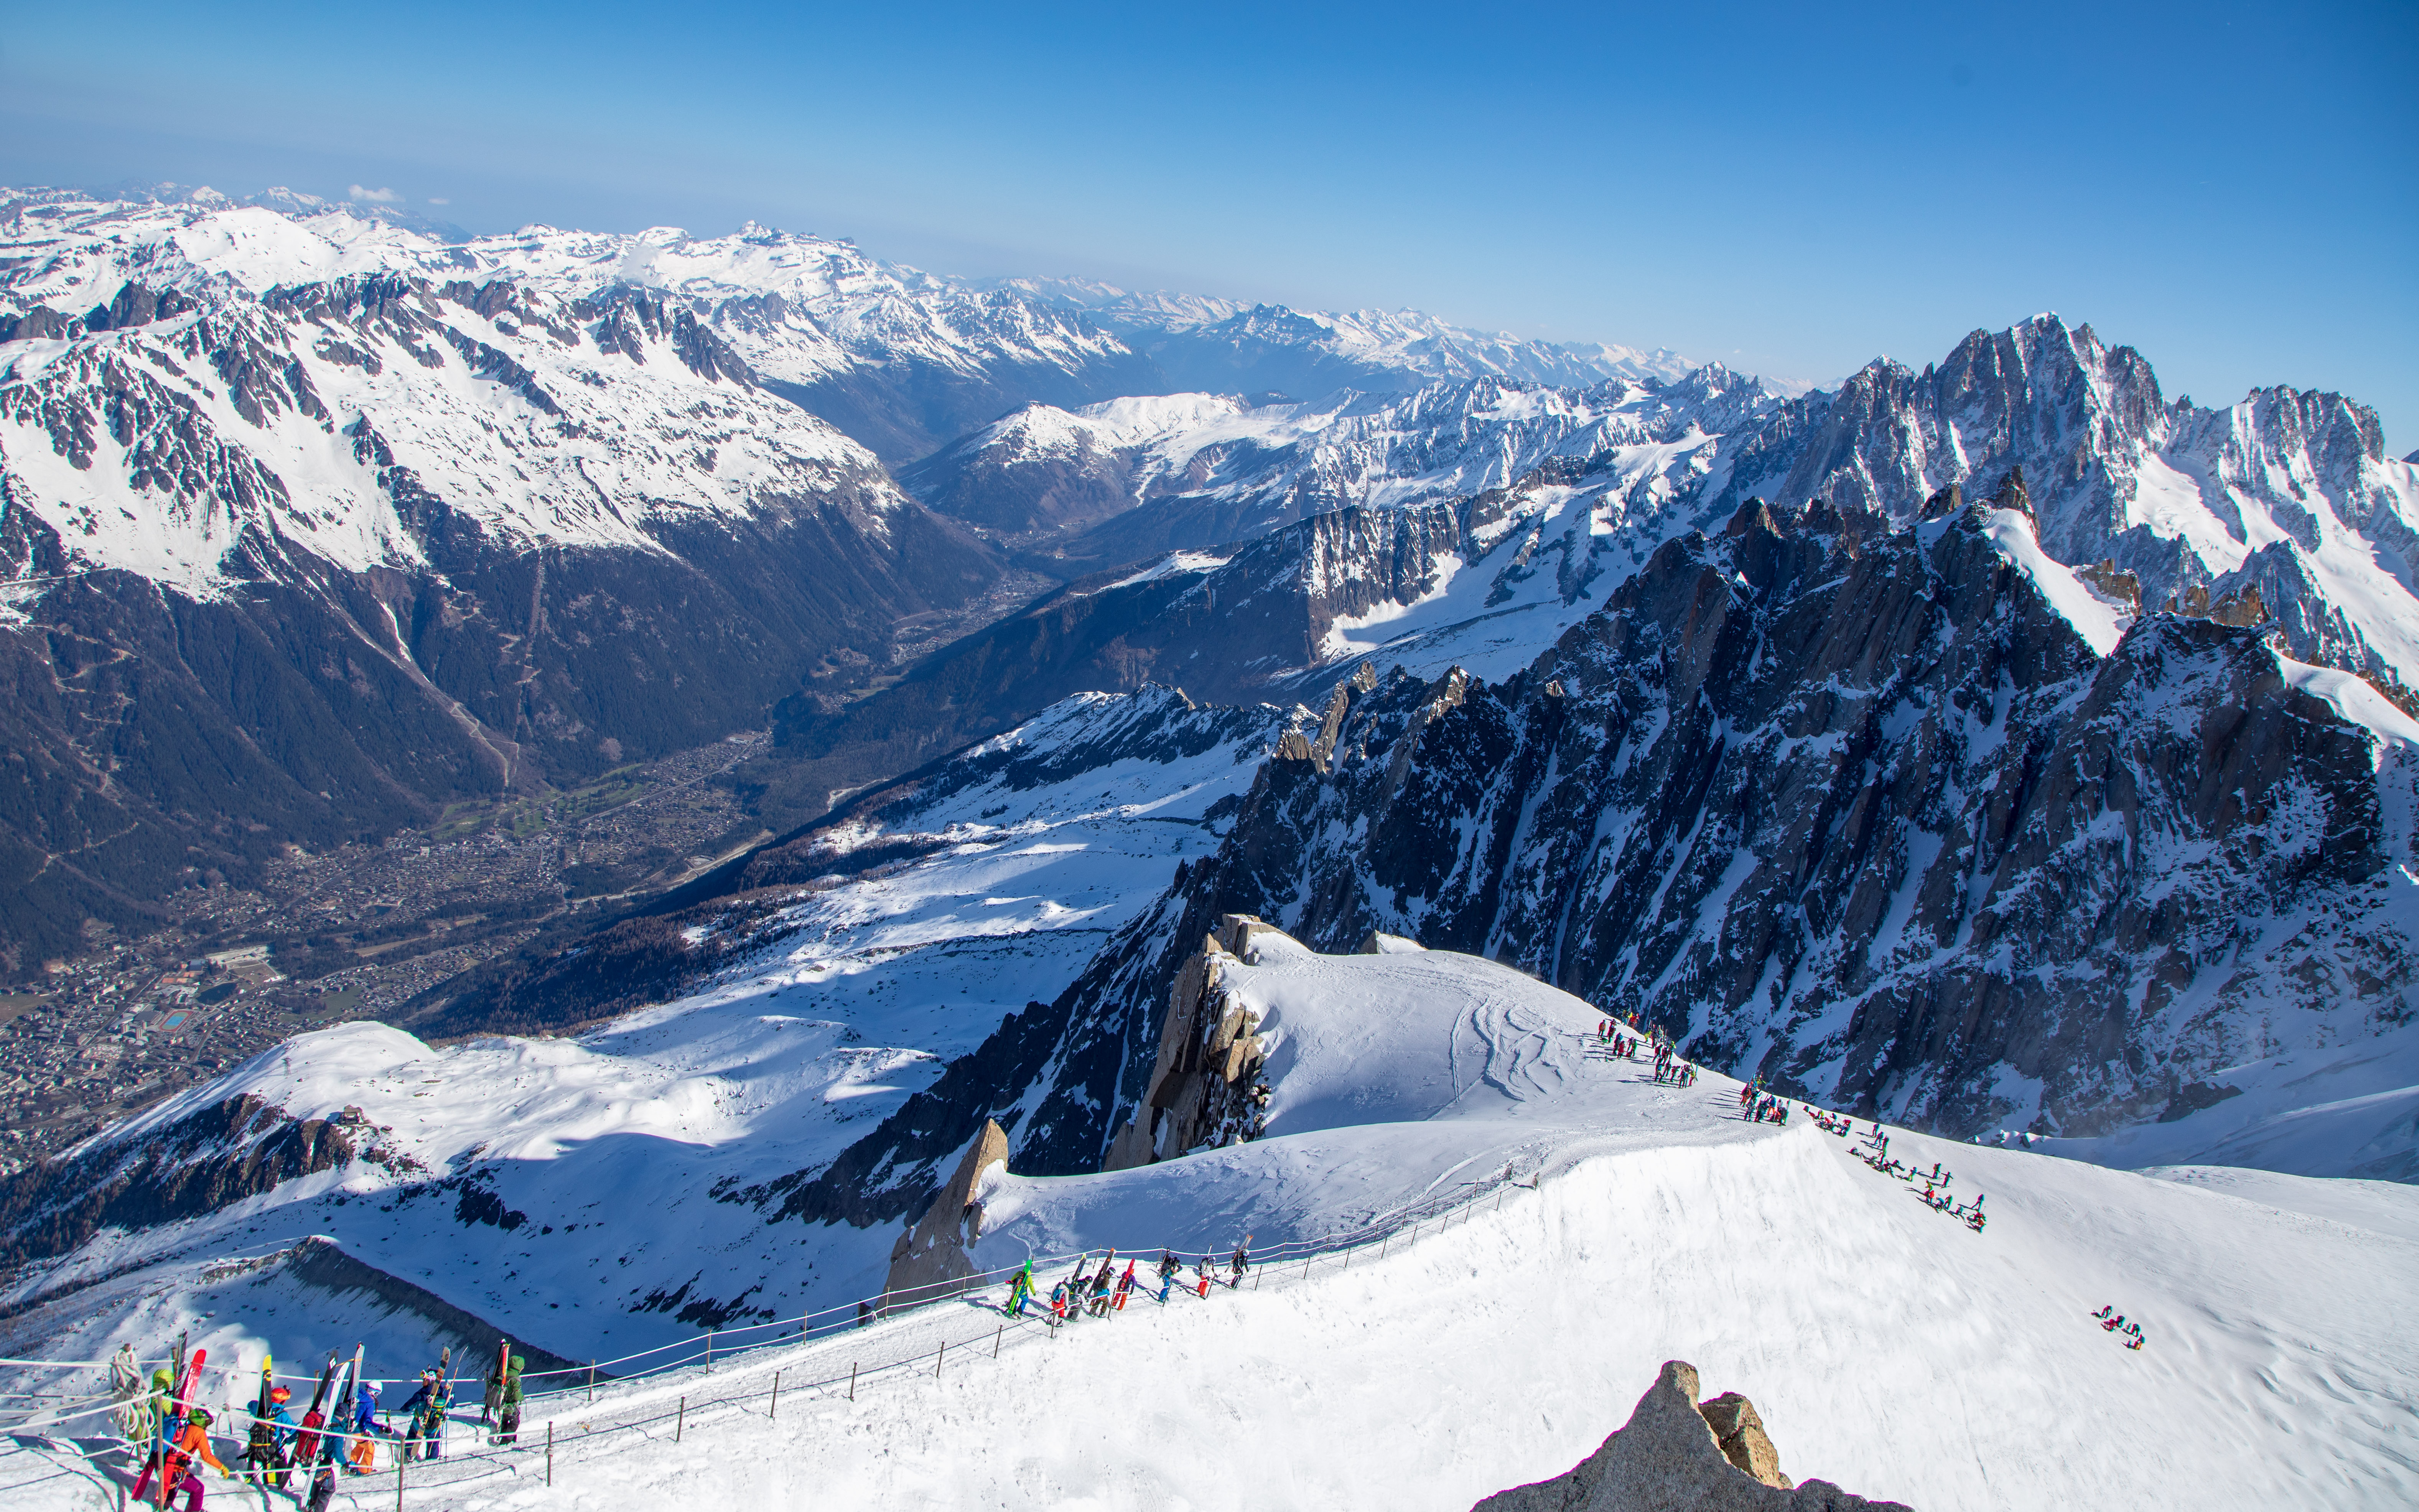 The Ski Bum's Guide to Chamonix